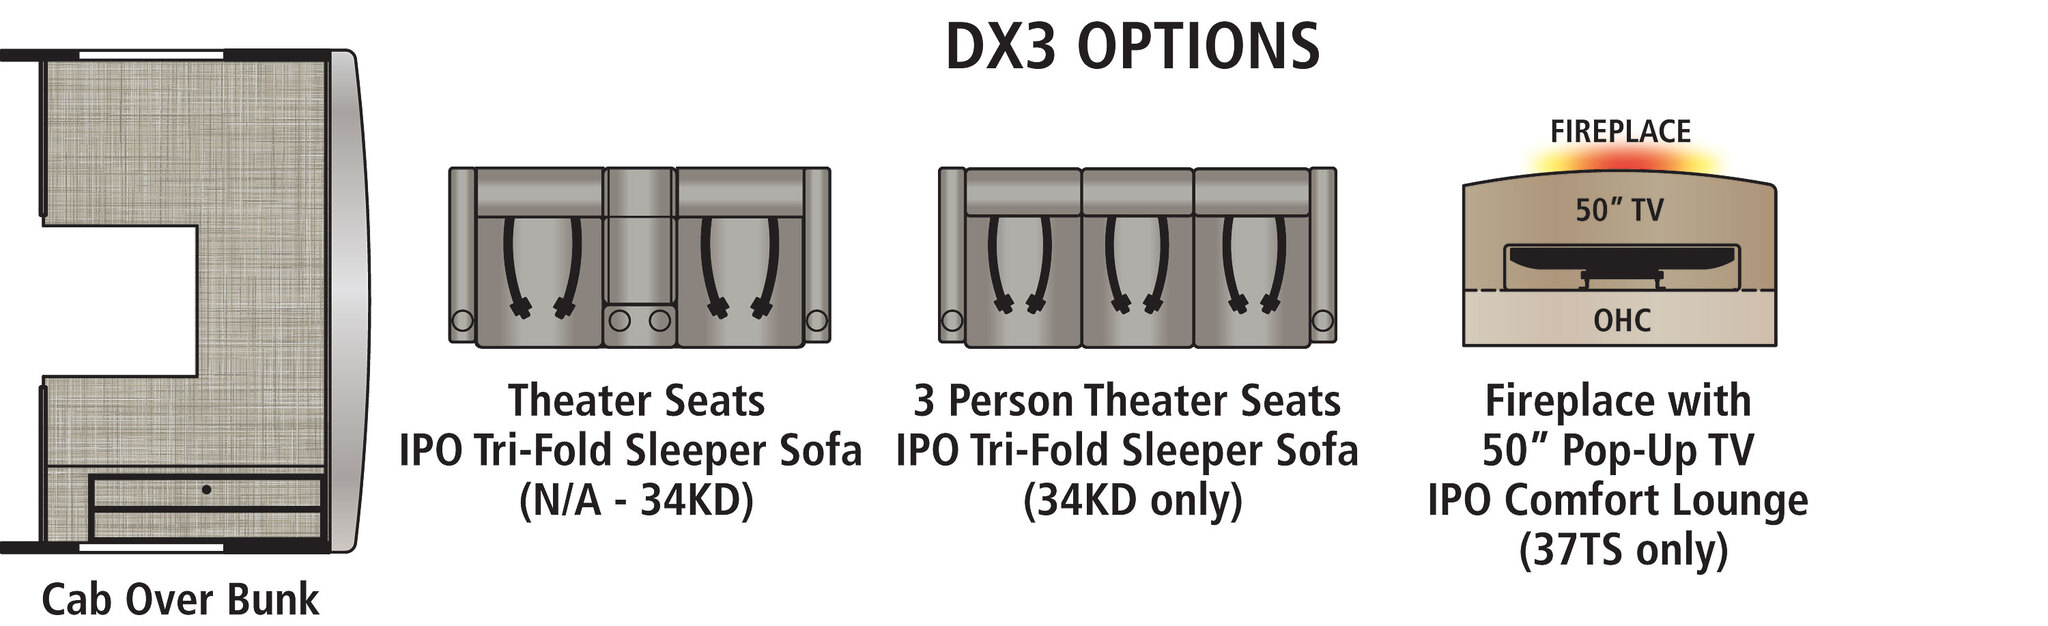 2022 Dynamax DX3 37TS Floor Plan